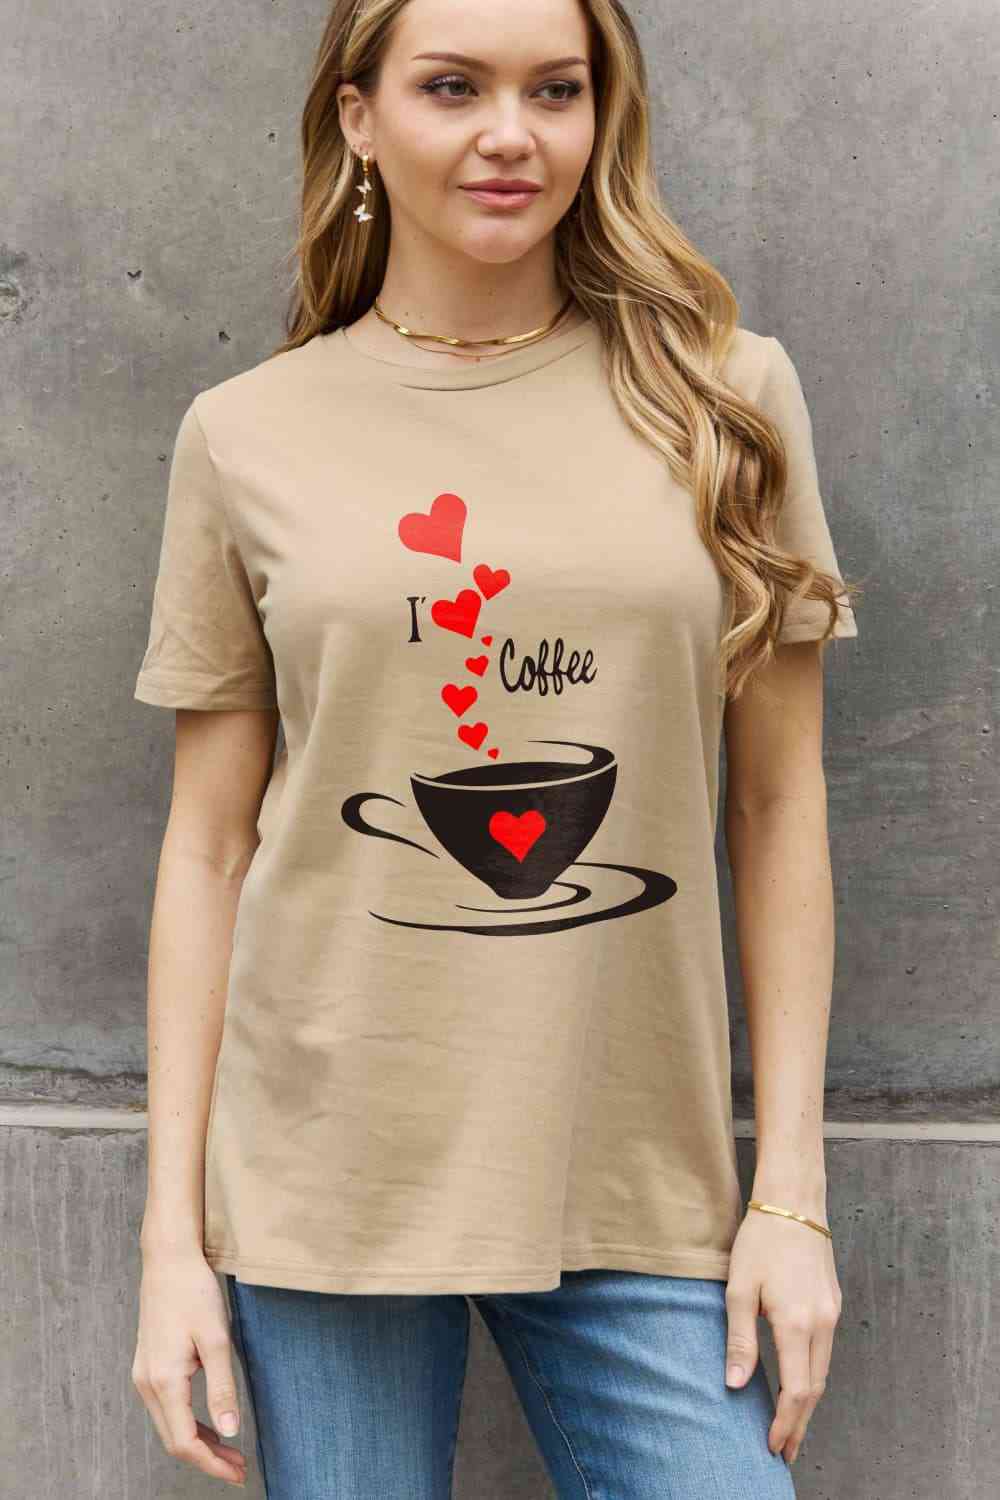 I LOVE COFFEE Graphic Cotton Tee - T-Shirts - Shirts & Tops - 10 - 2024